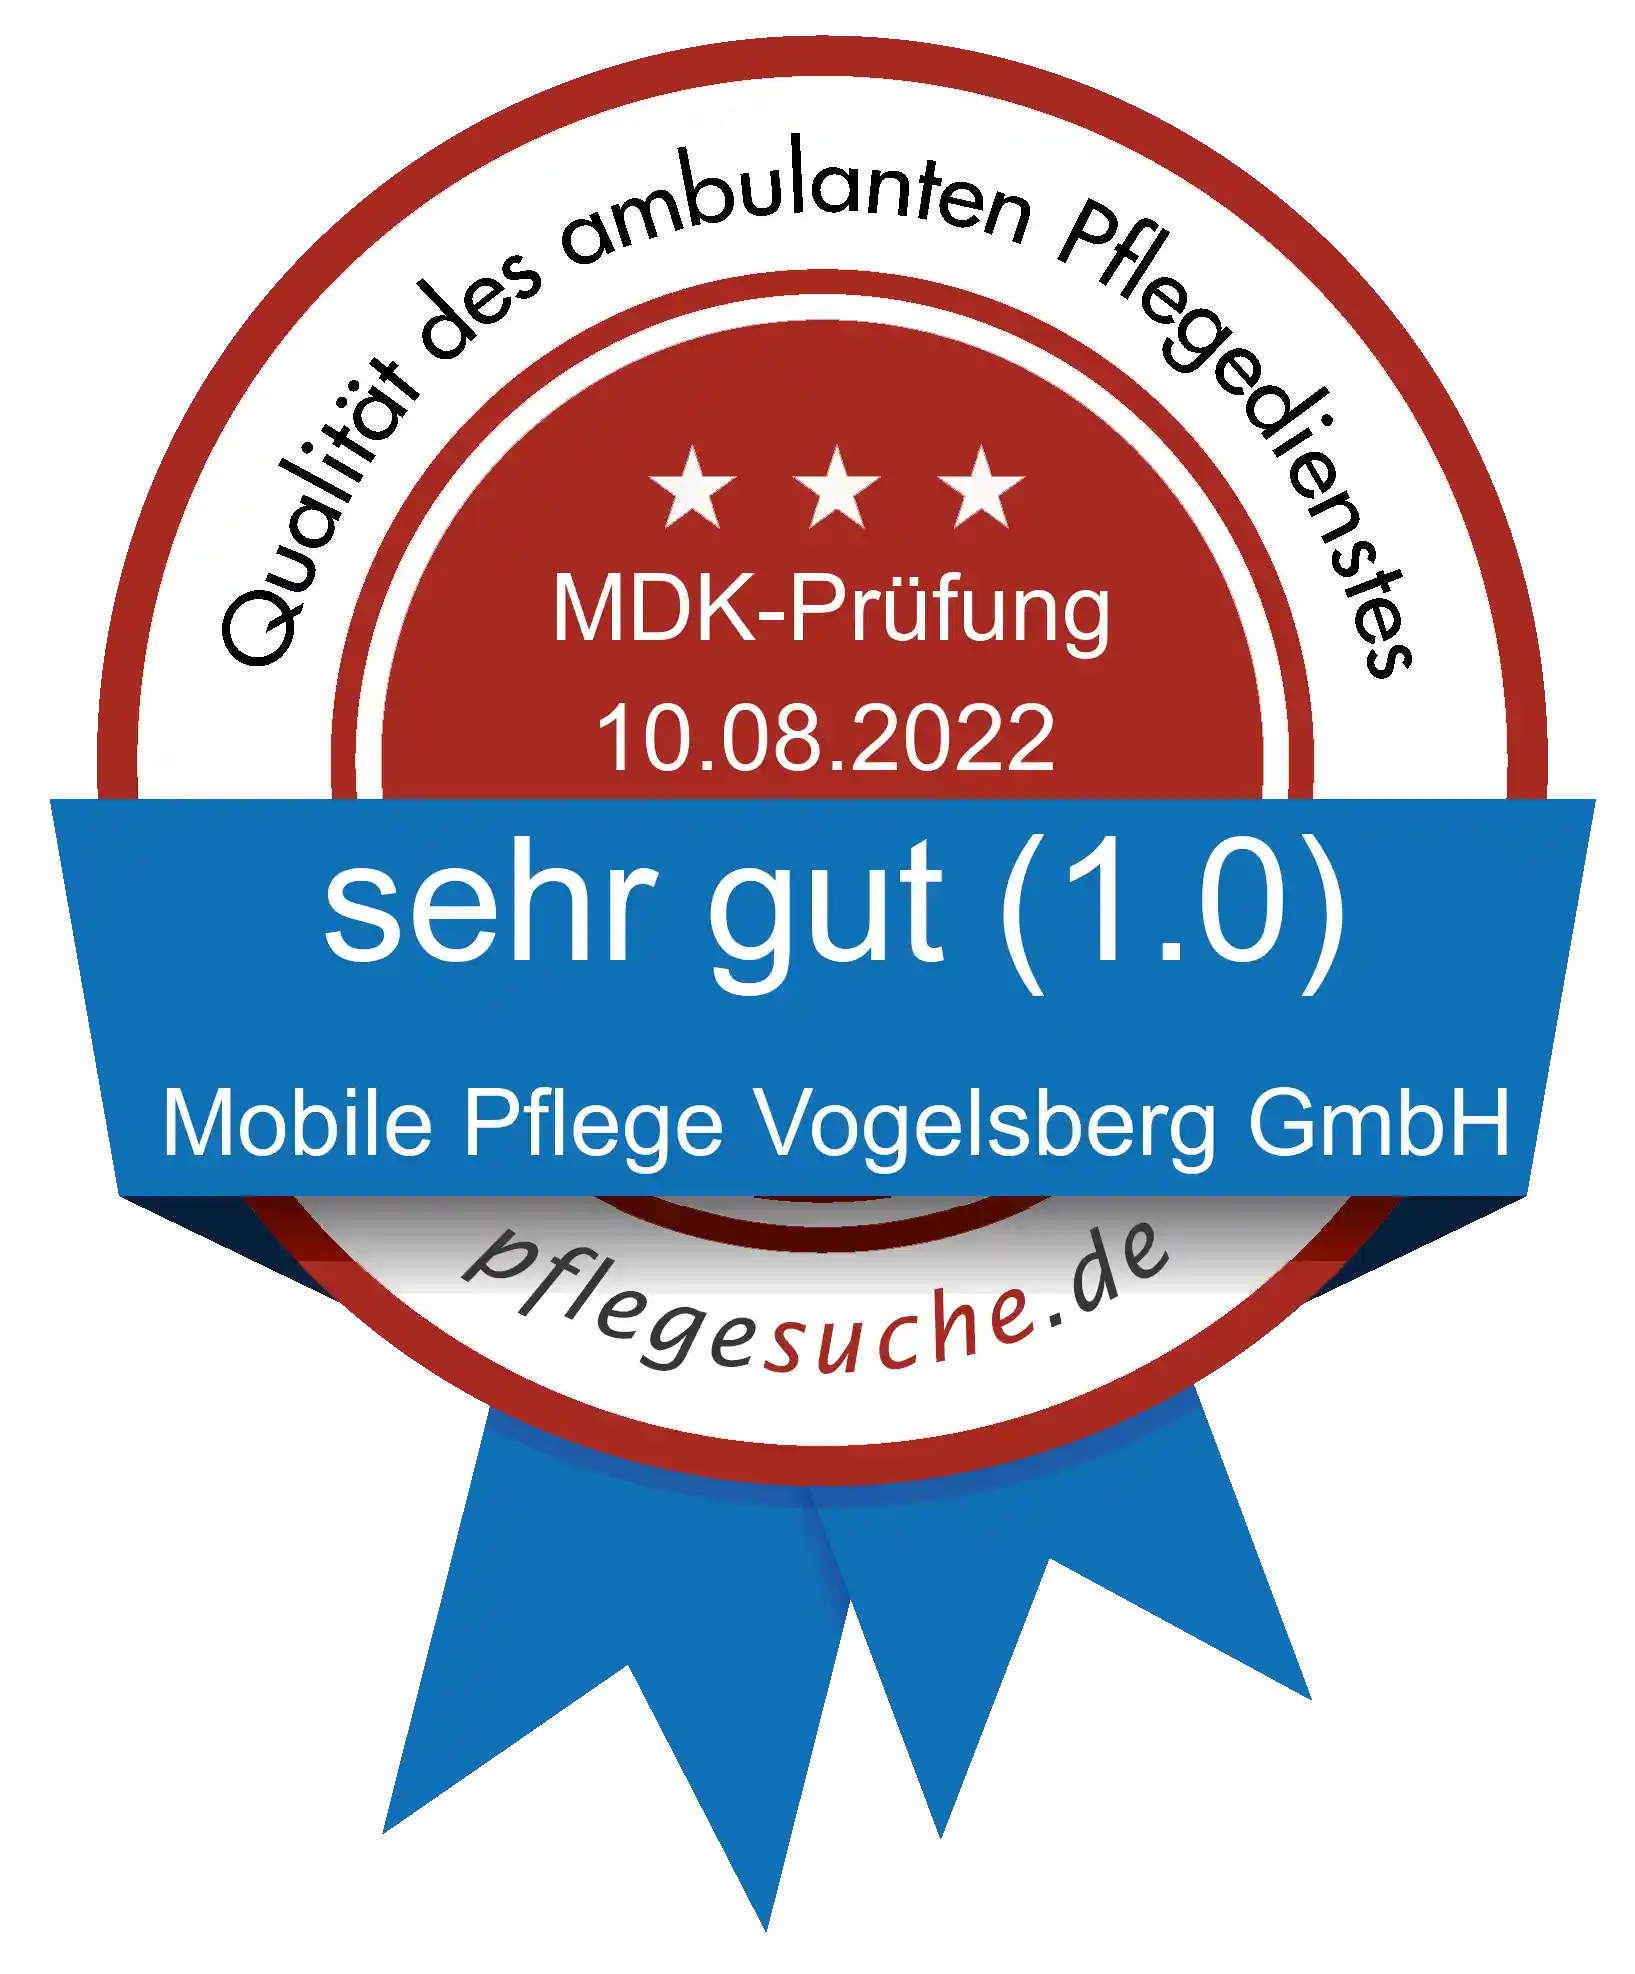 Siegel Benotung: Mobile Pflege Vogelsberg GmbH